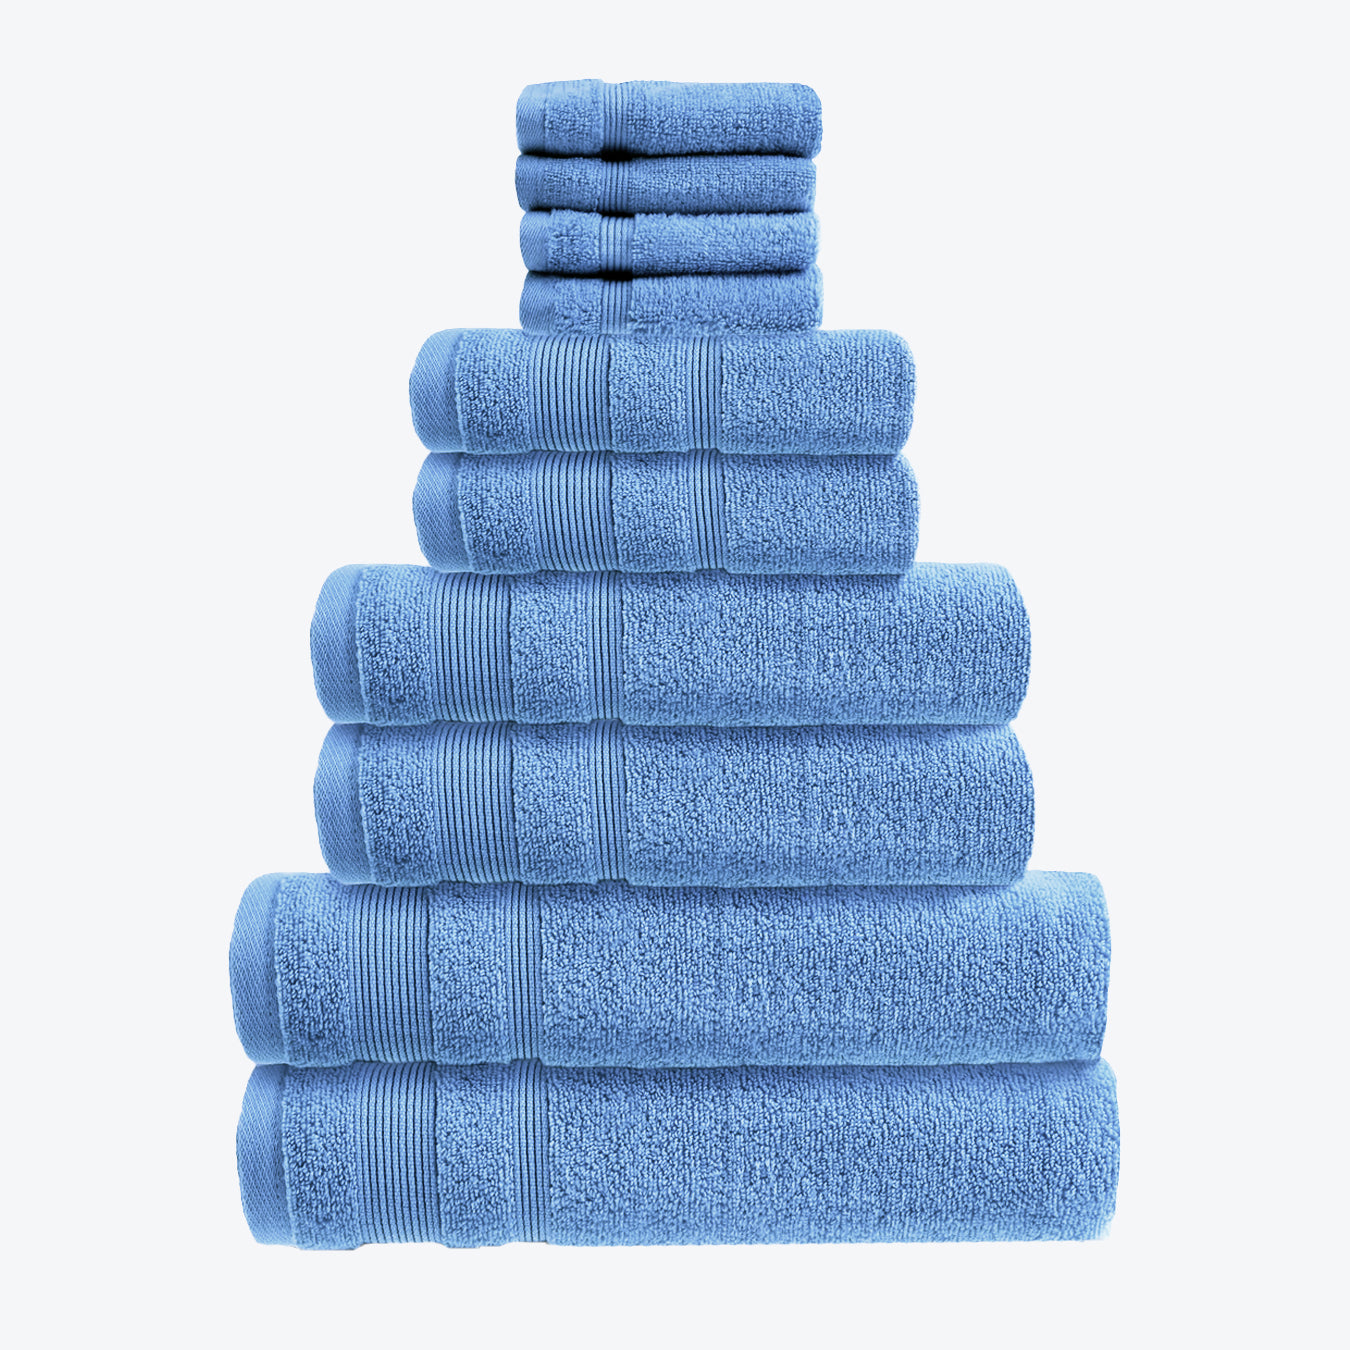 Cornish Blue Zero Twist 10pc Towel Set Egyptian Cotton Bathroom Towel Bale. Hand Towels, Bath Towels, Bath Sheets, and Face Cloths